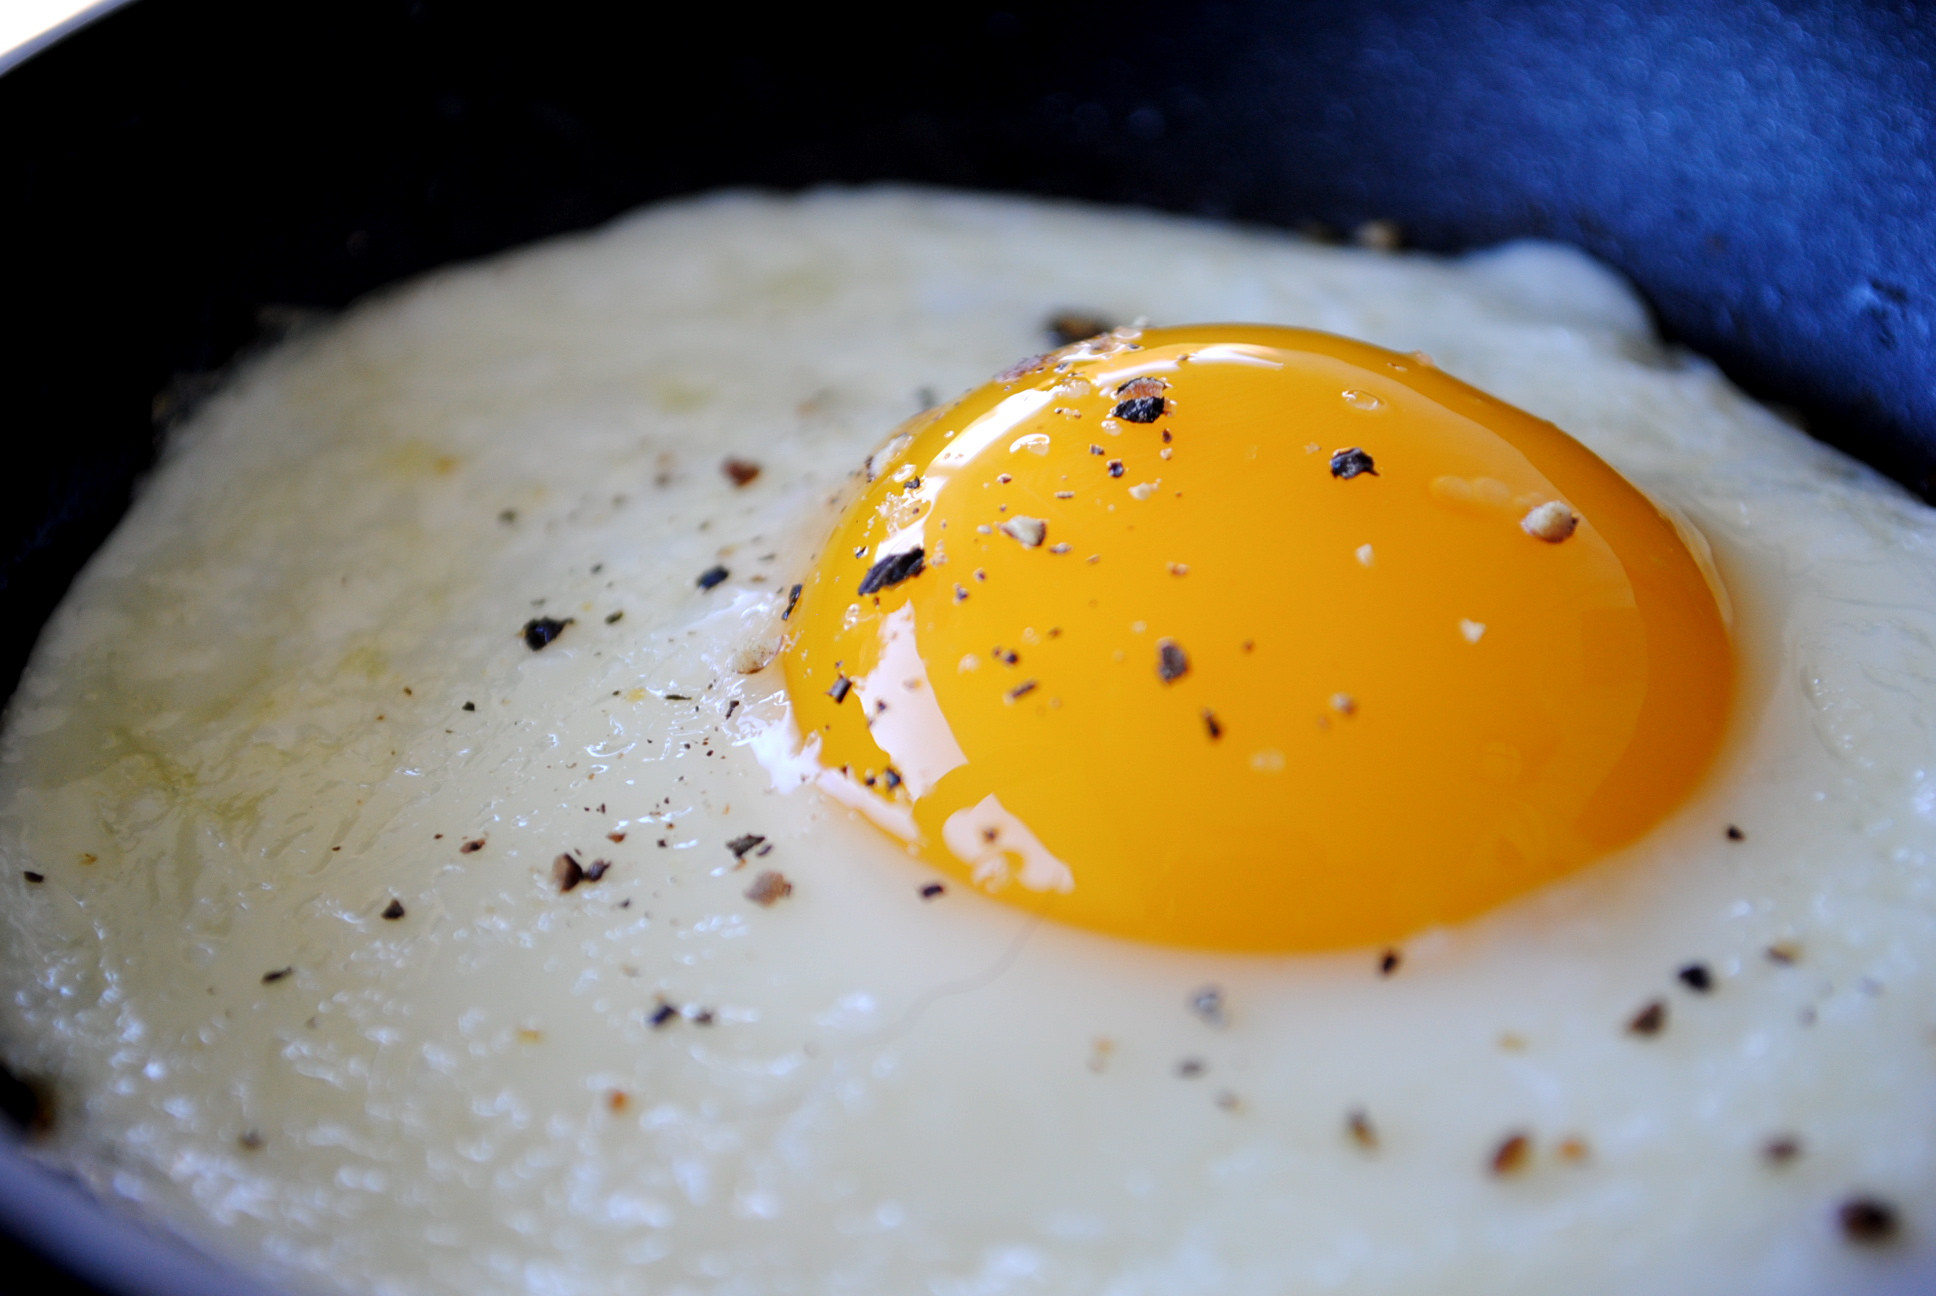 frying - How do I make prettier fried eggs? - Seasoned Advice